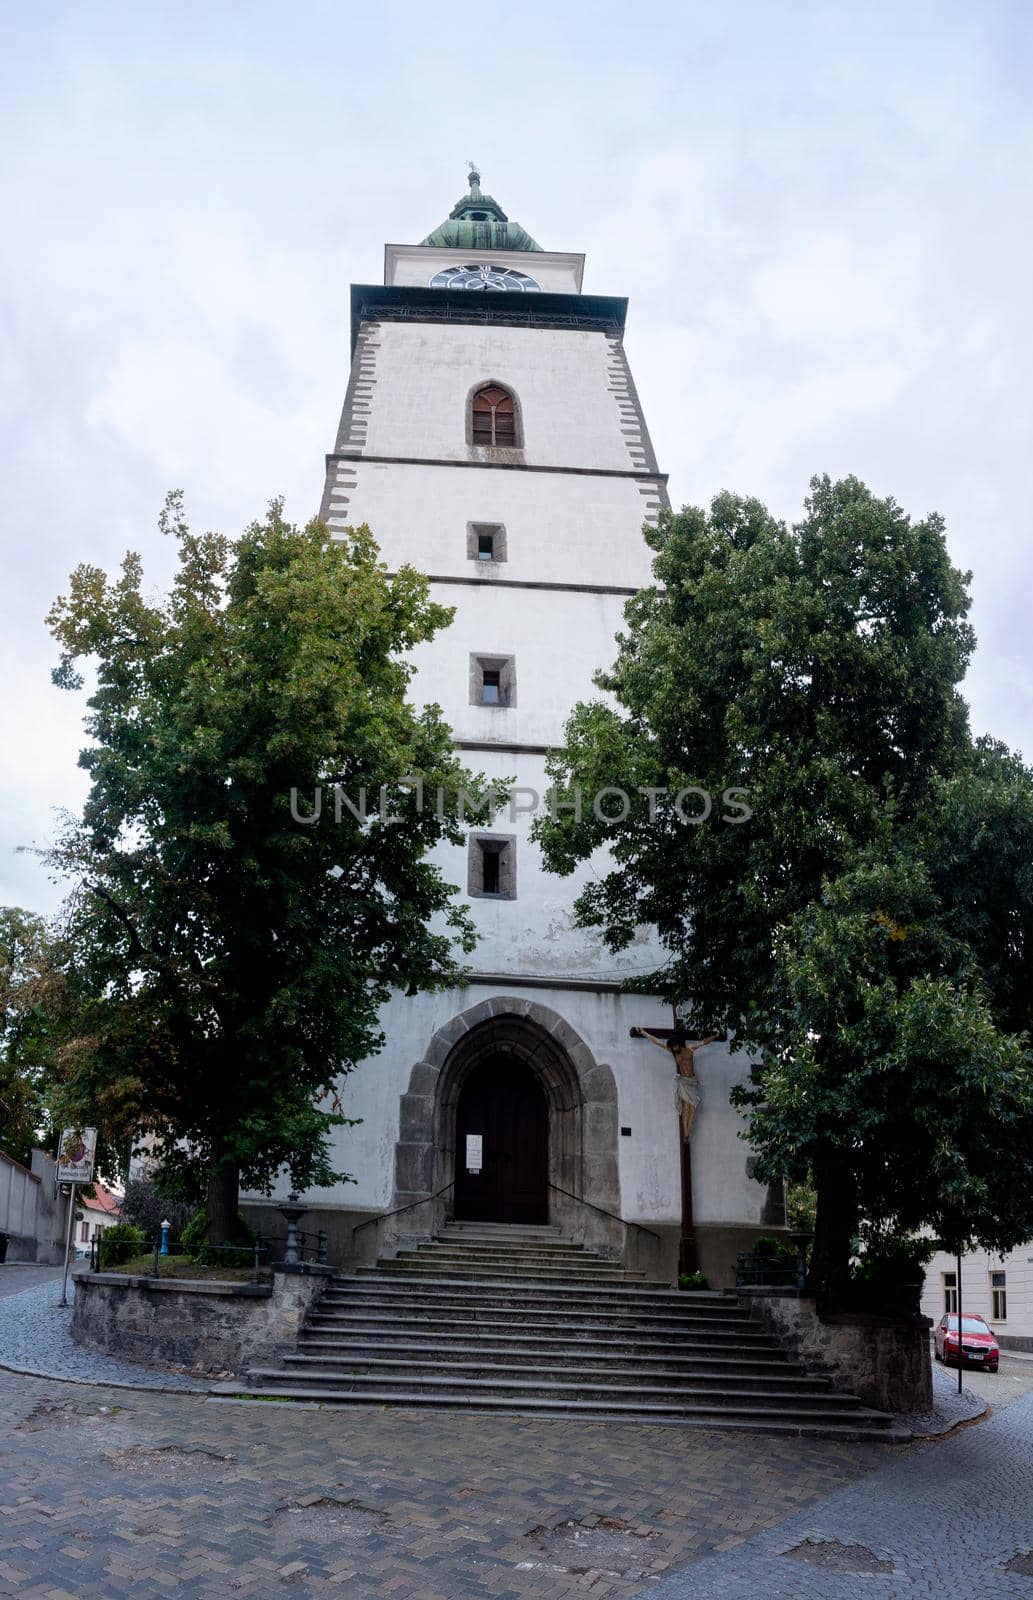 Municipal tower in Trebic, Czech republic by rdonar2